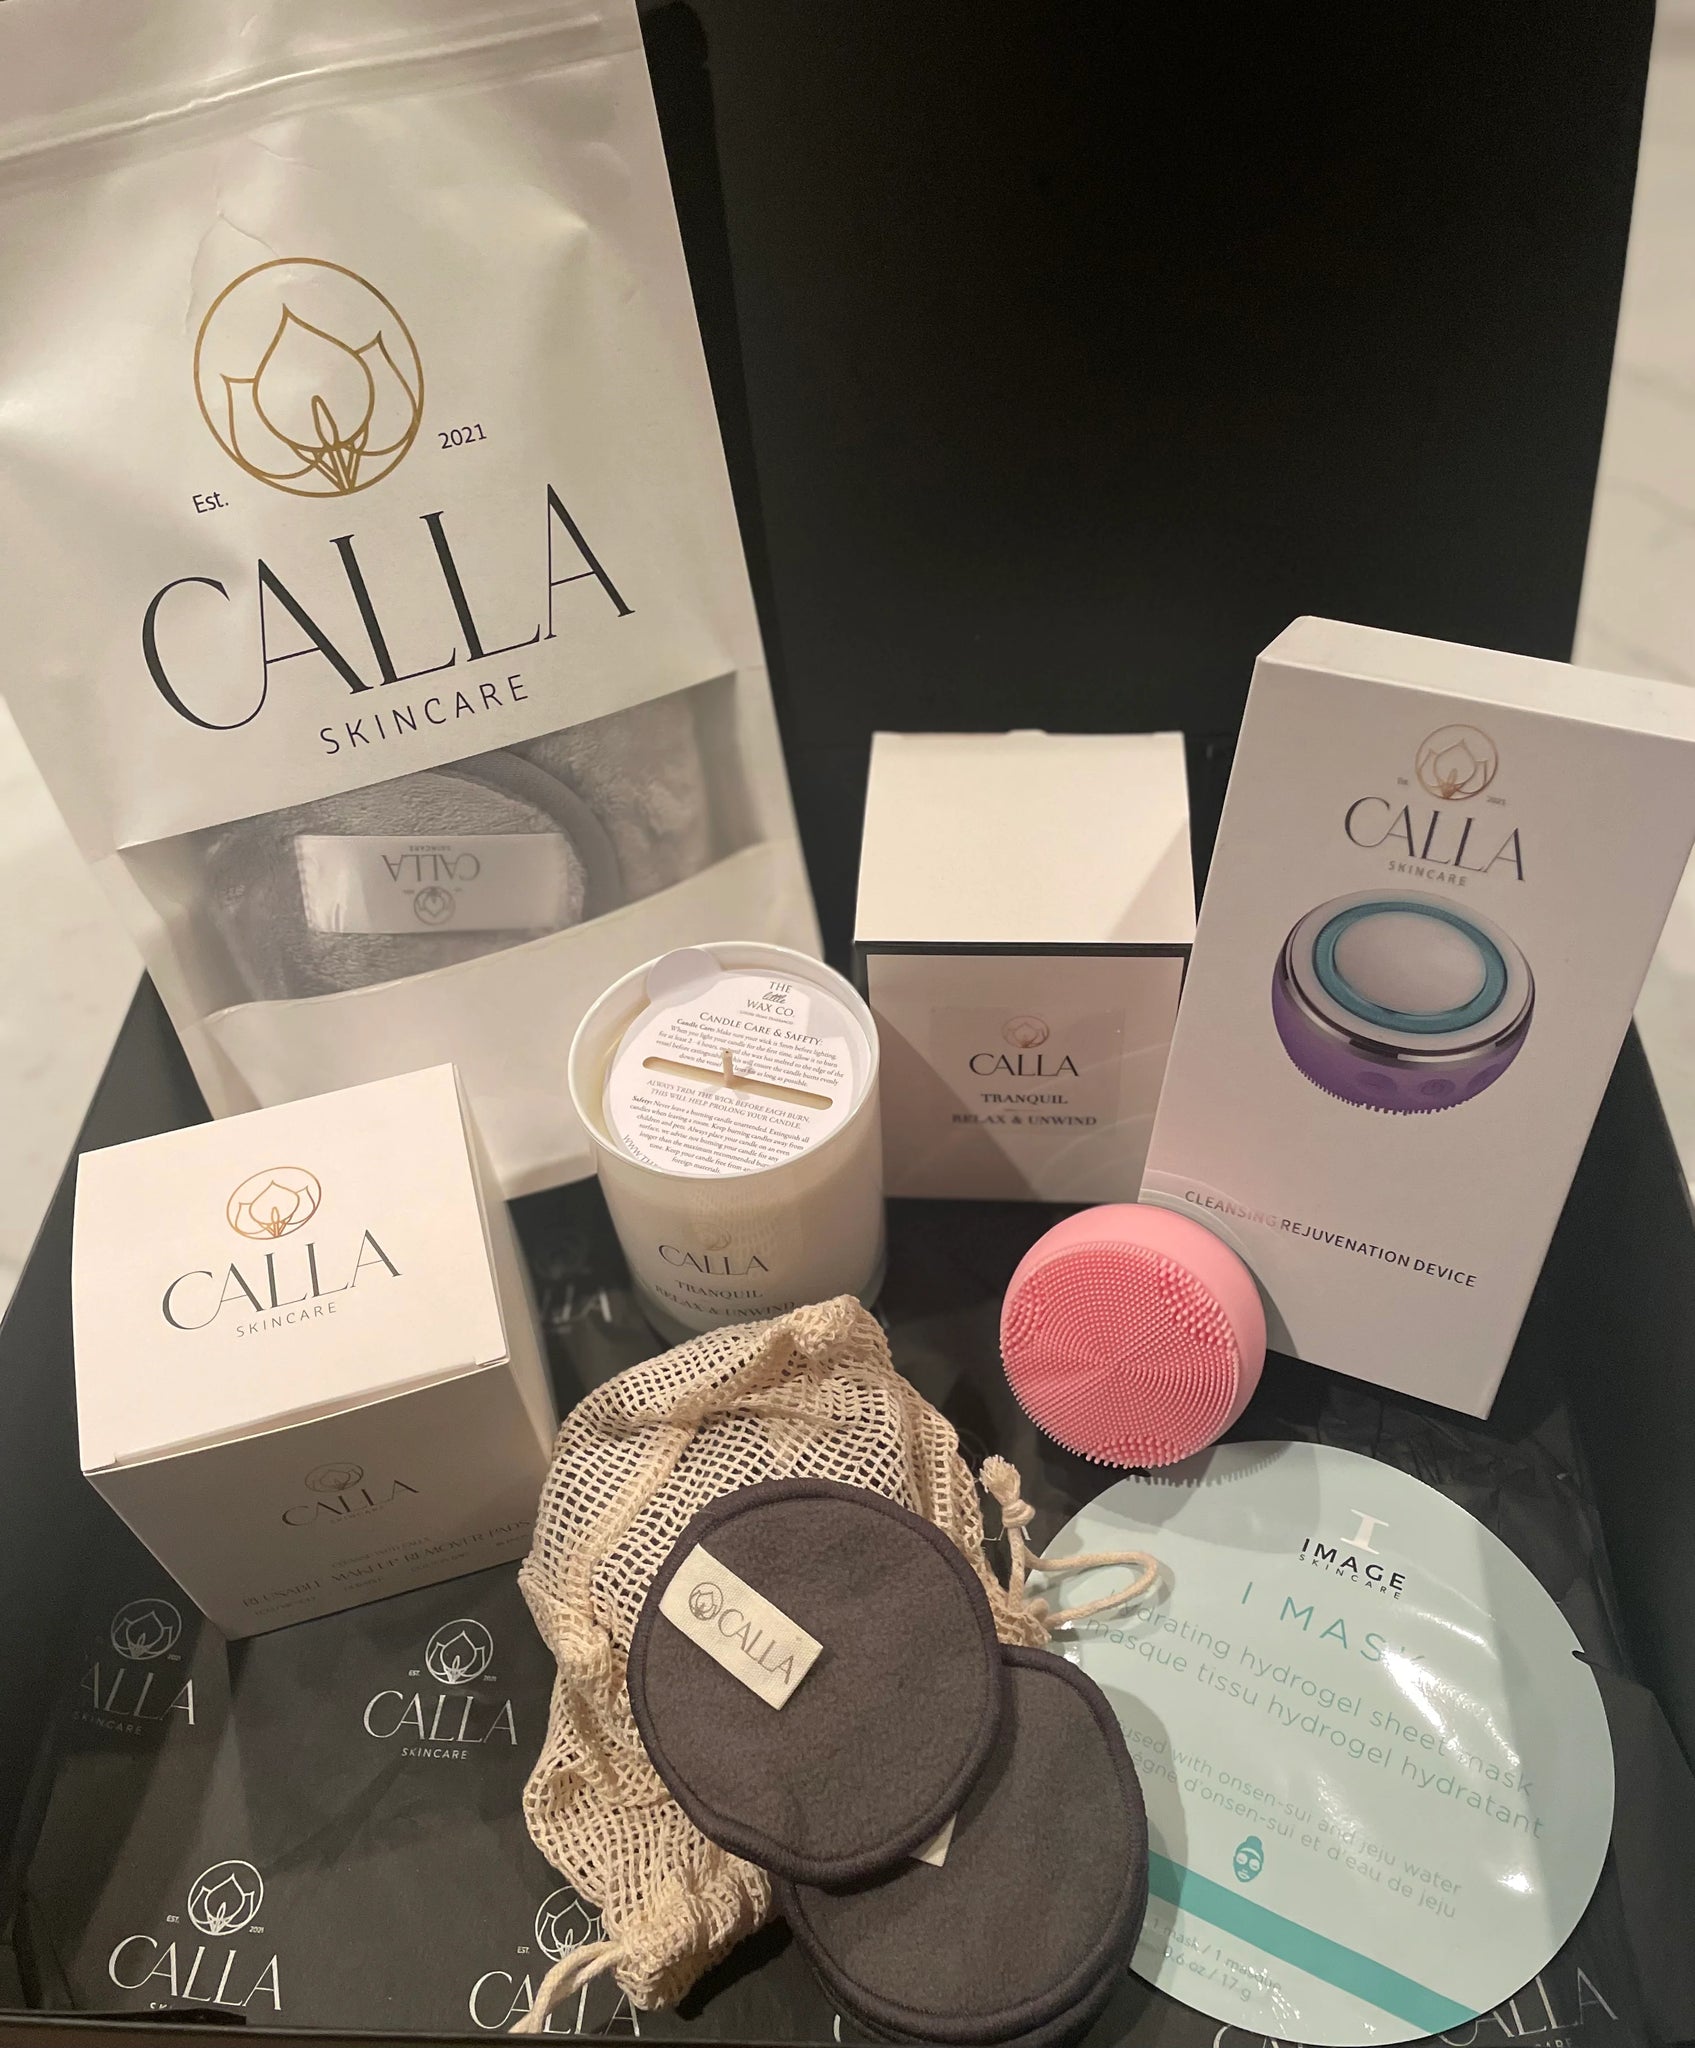 Calla skincare luxury gift set